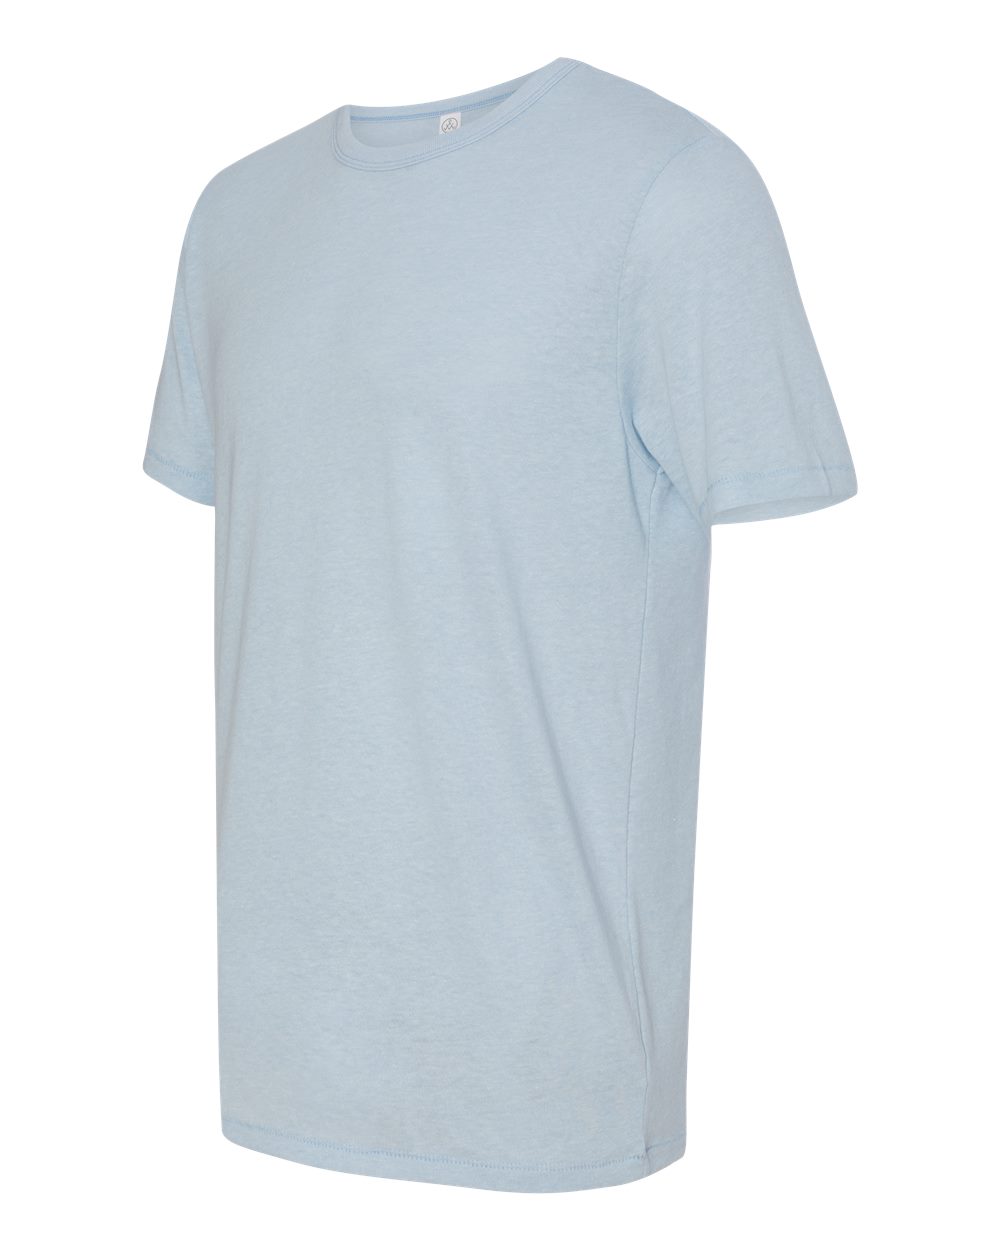 Alternative 5050 - Vintage 50/50 Jersey Keeper T-Shirt $6.35 - T-Shirts